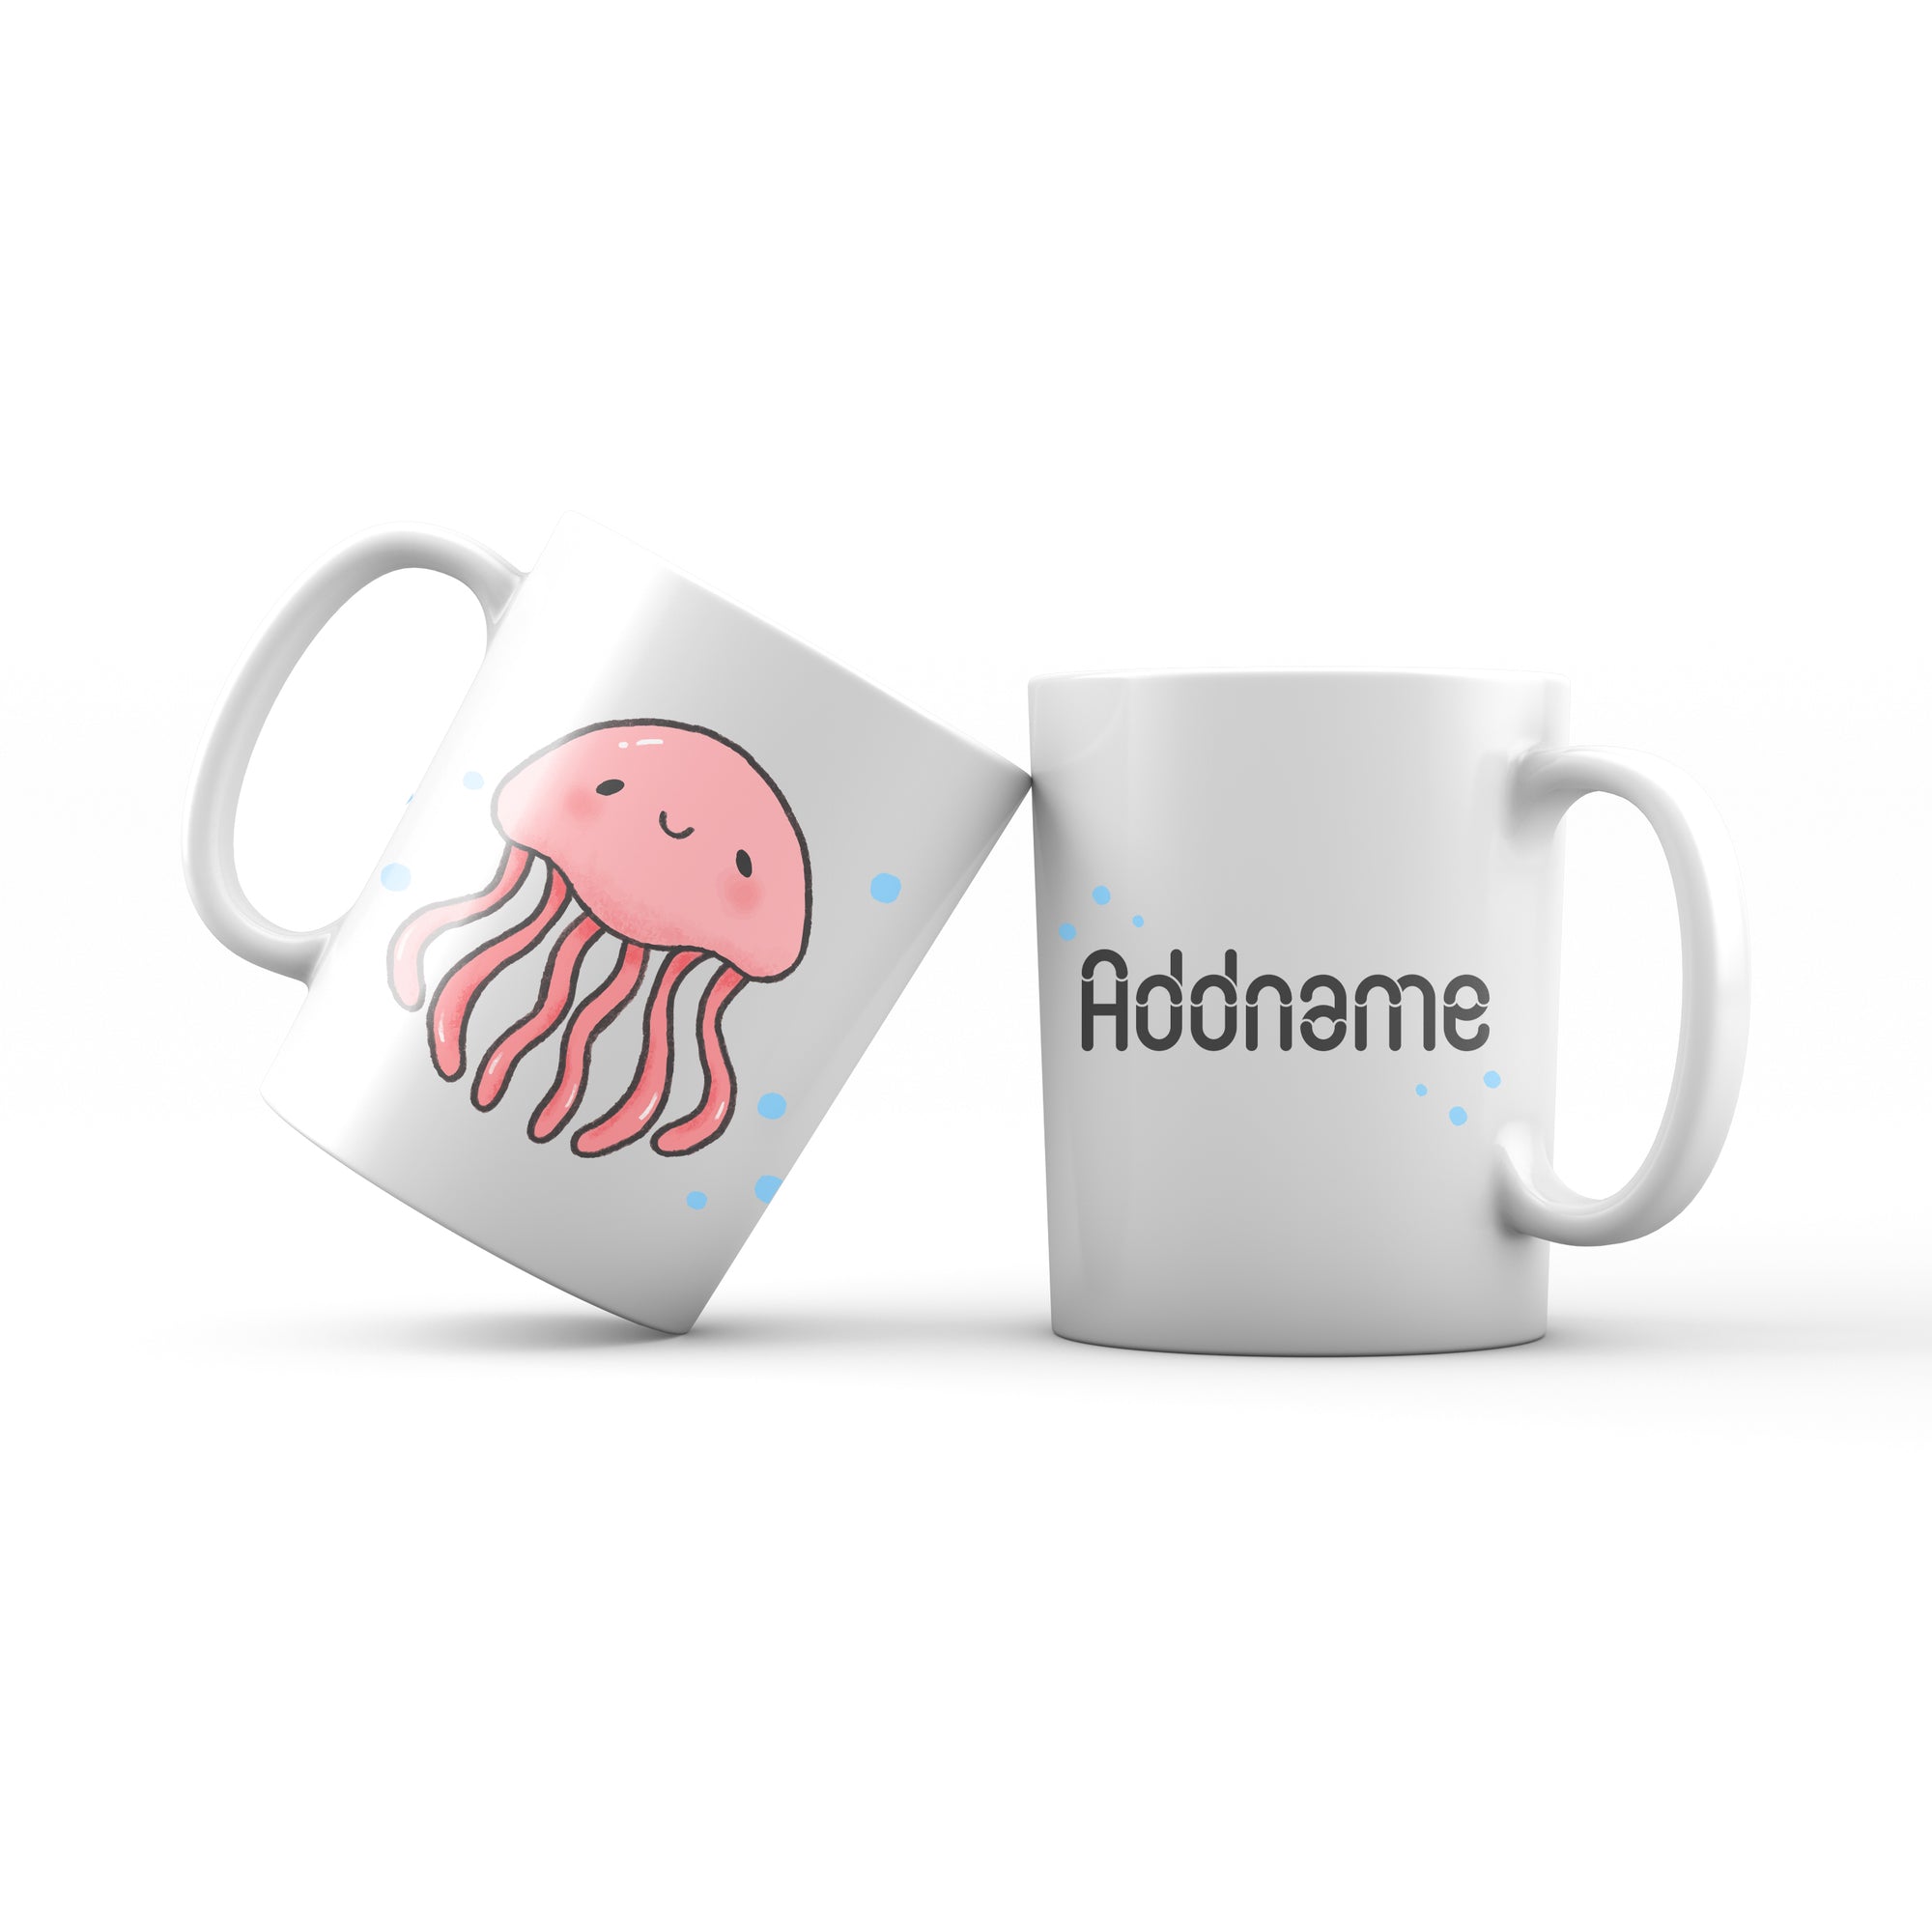 Cute drawn Animals Sea Jellyfish Addname Mug